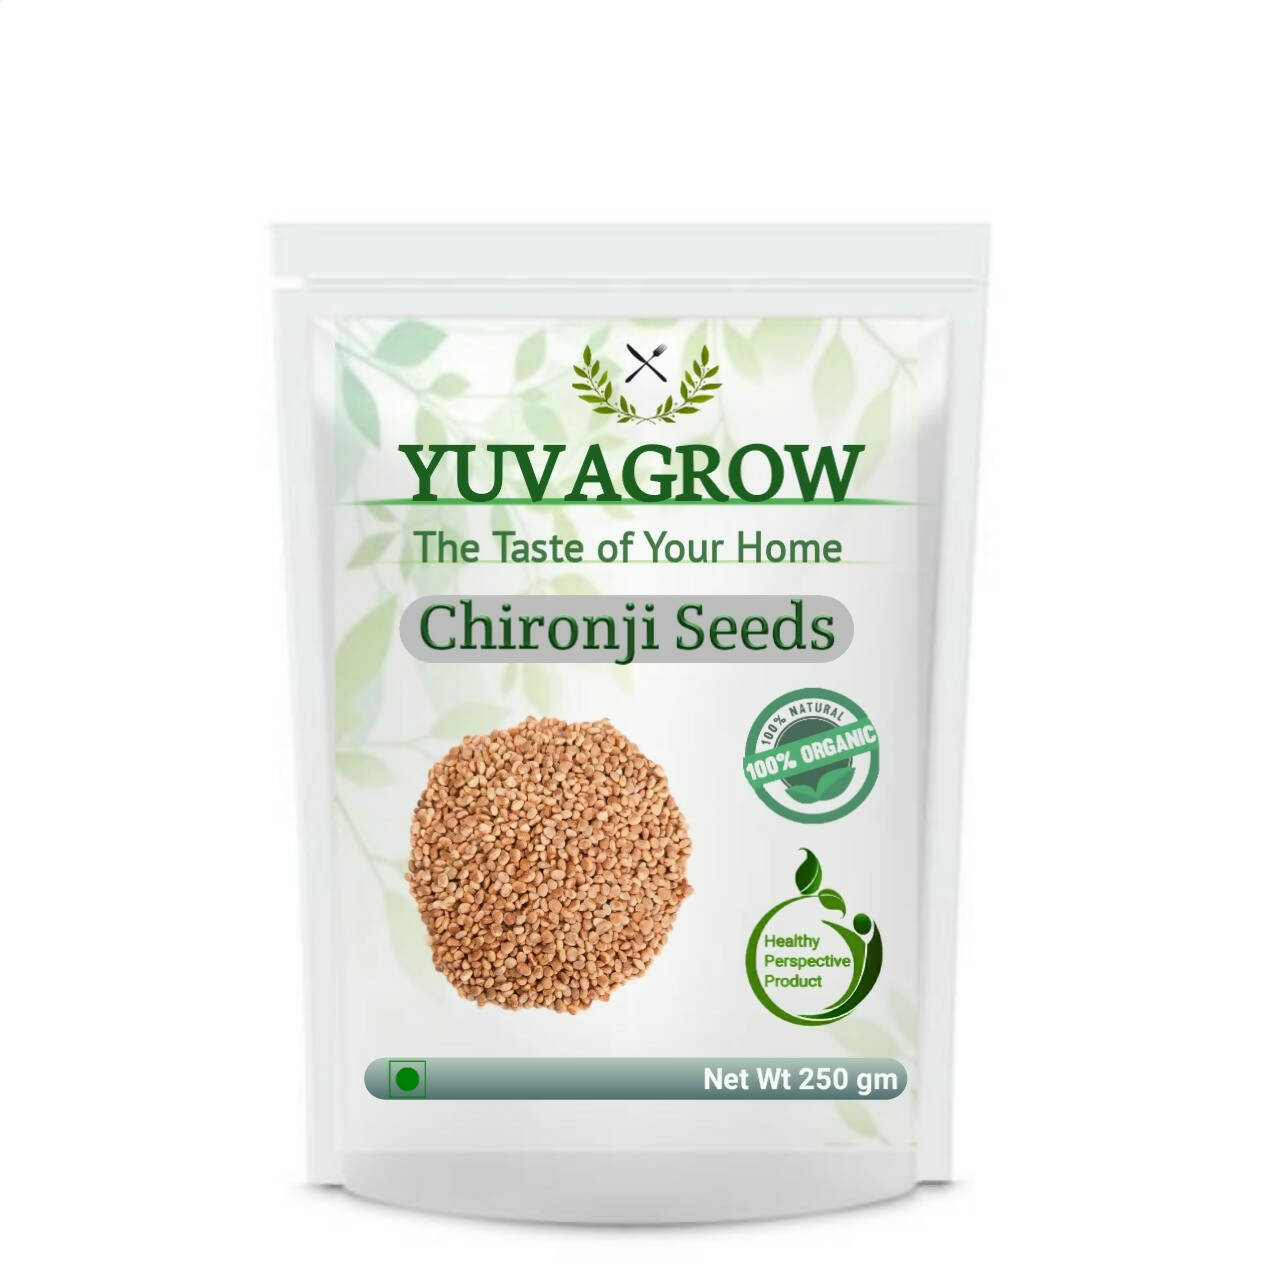 Yuvagrow Chironji Seeds - buy in USA, Australia, Canada